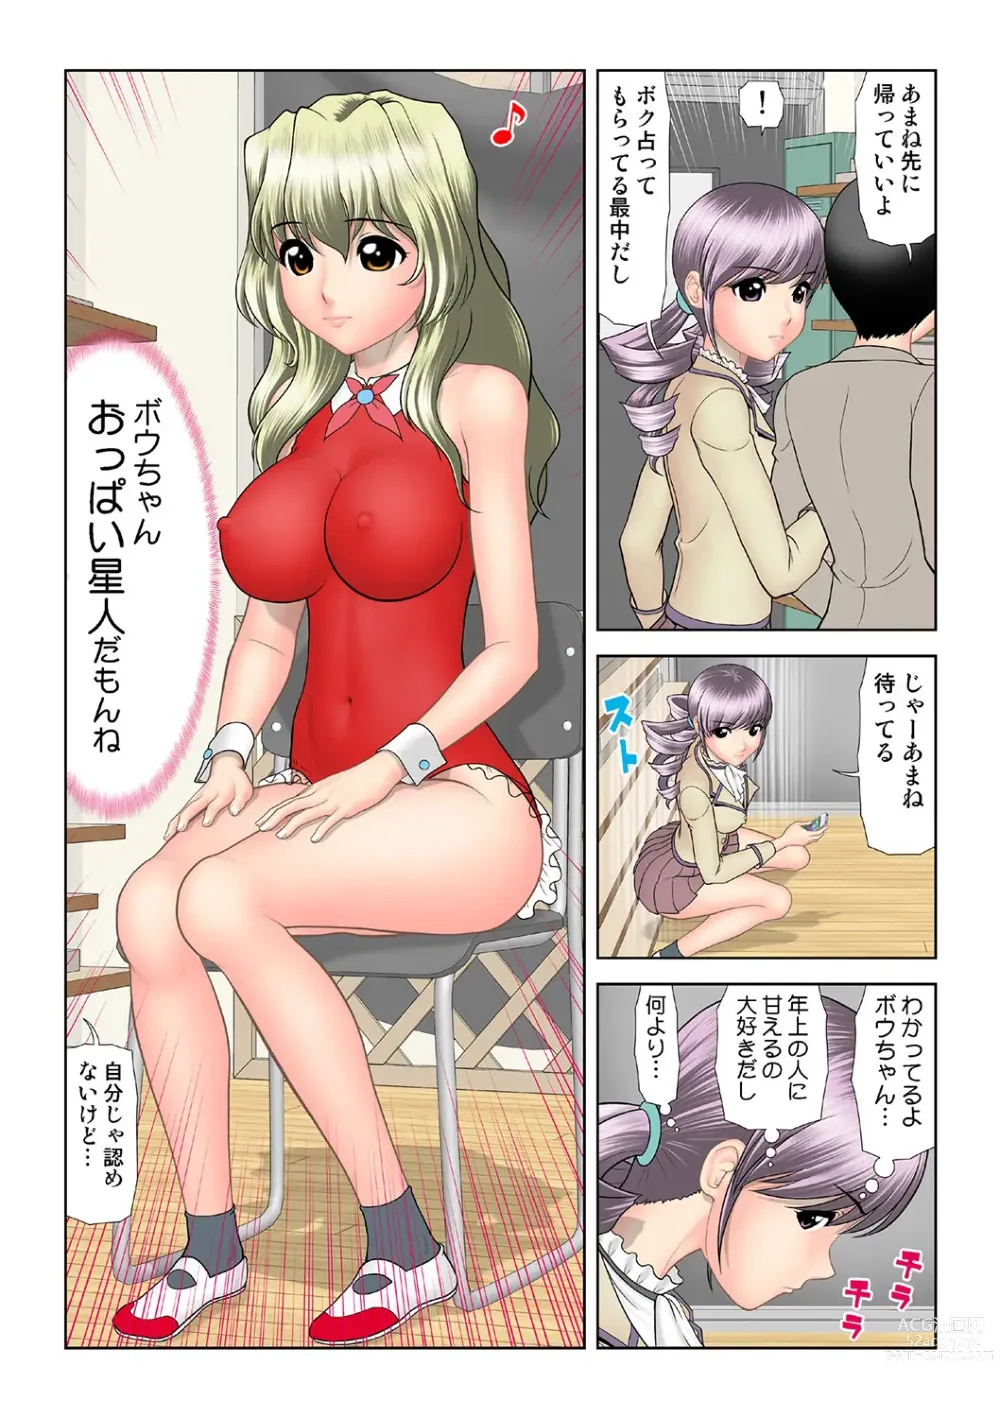 Page 136 of manga HiME-Mania Vol. 39